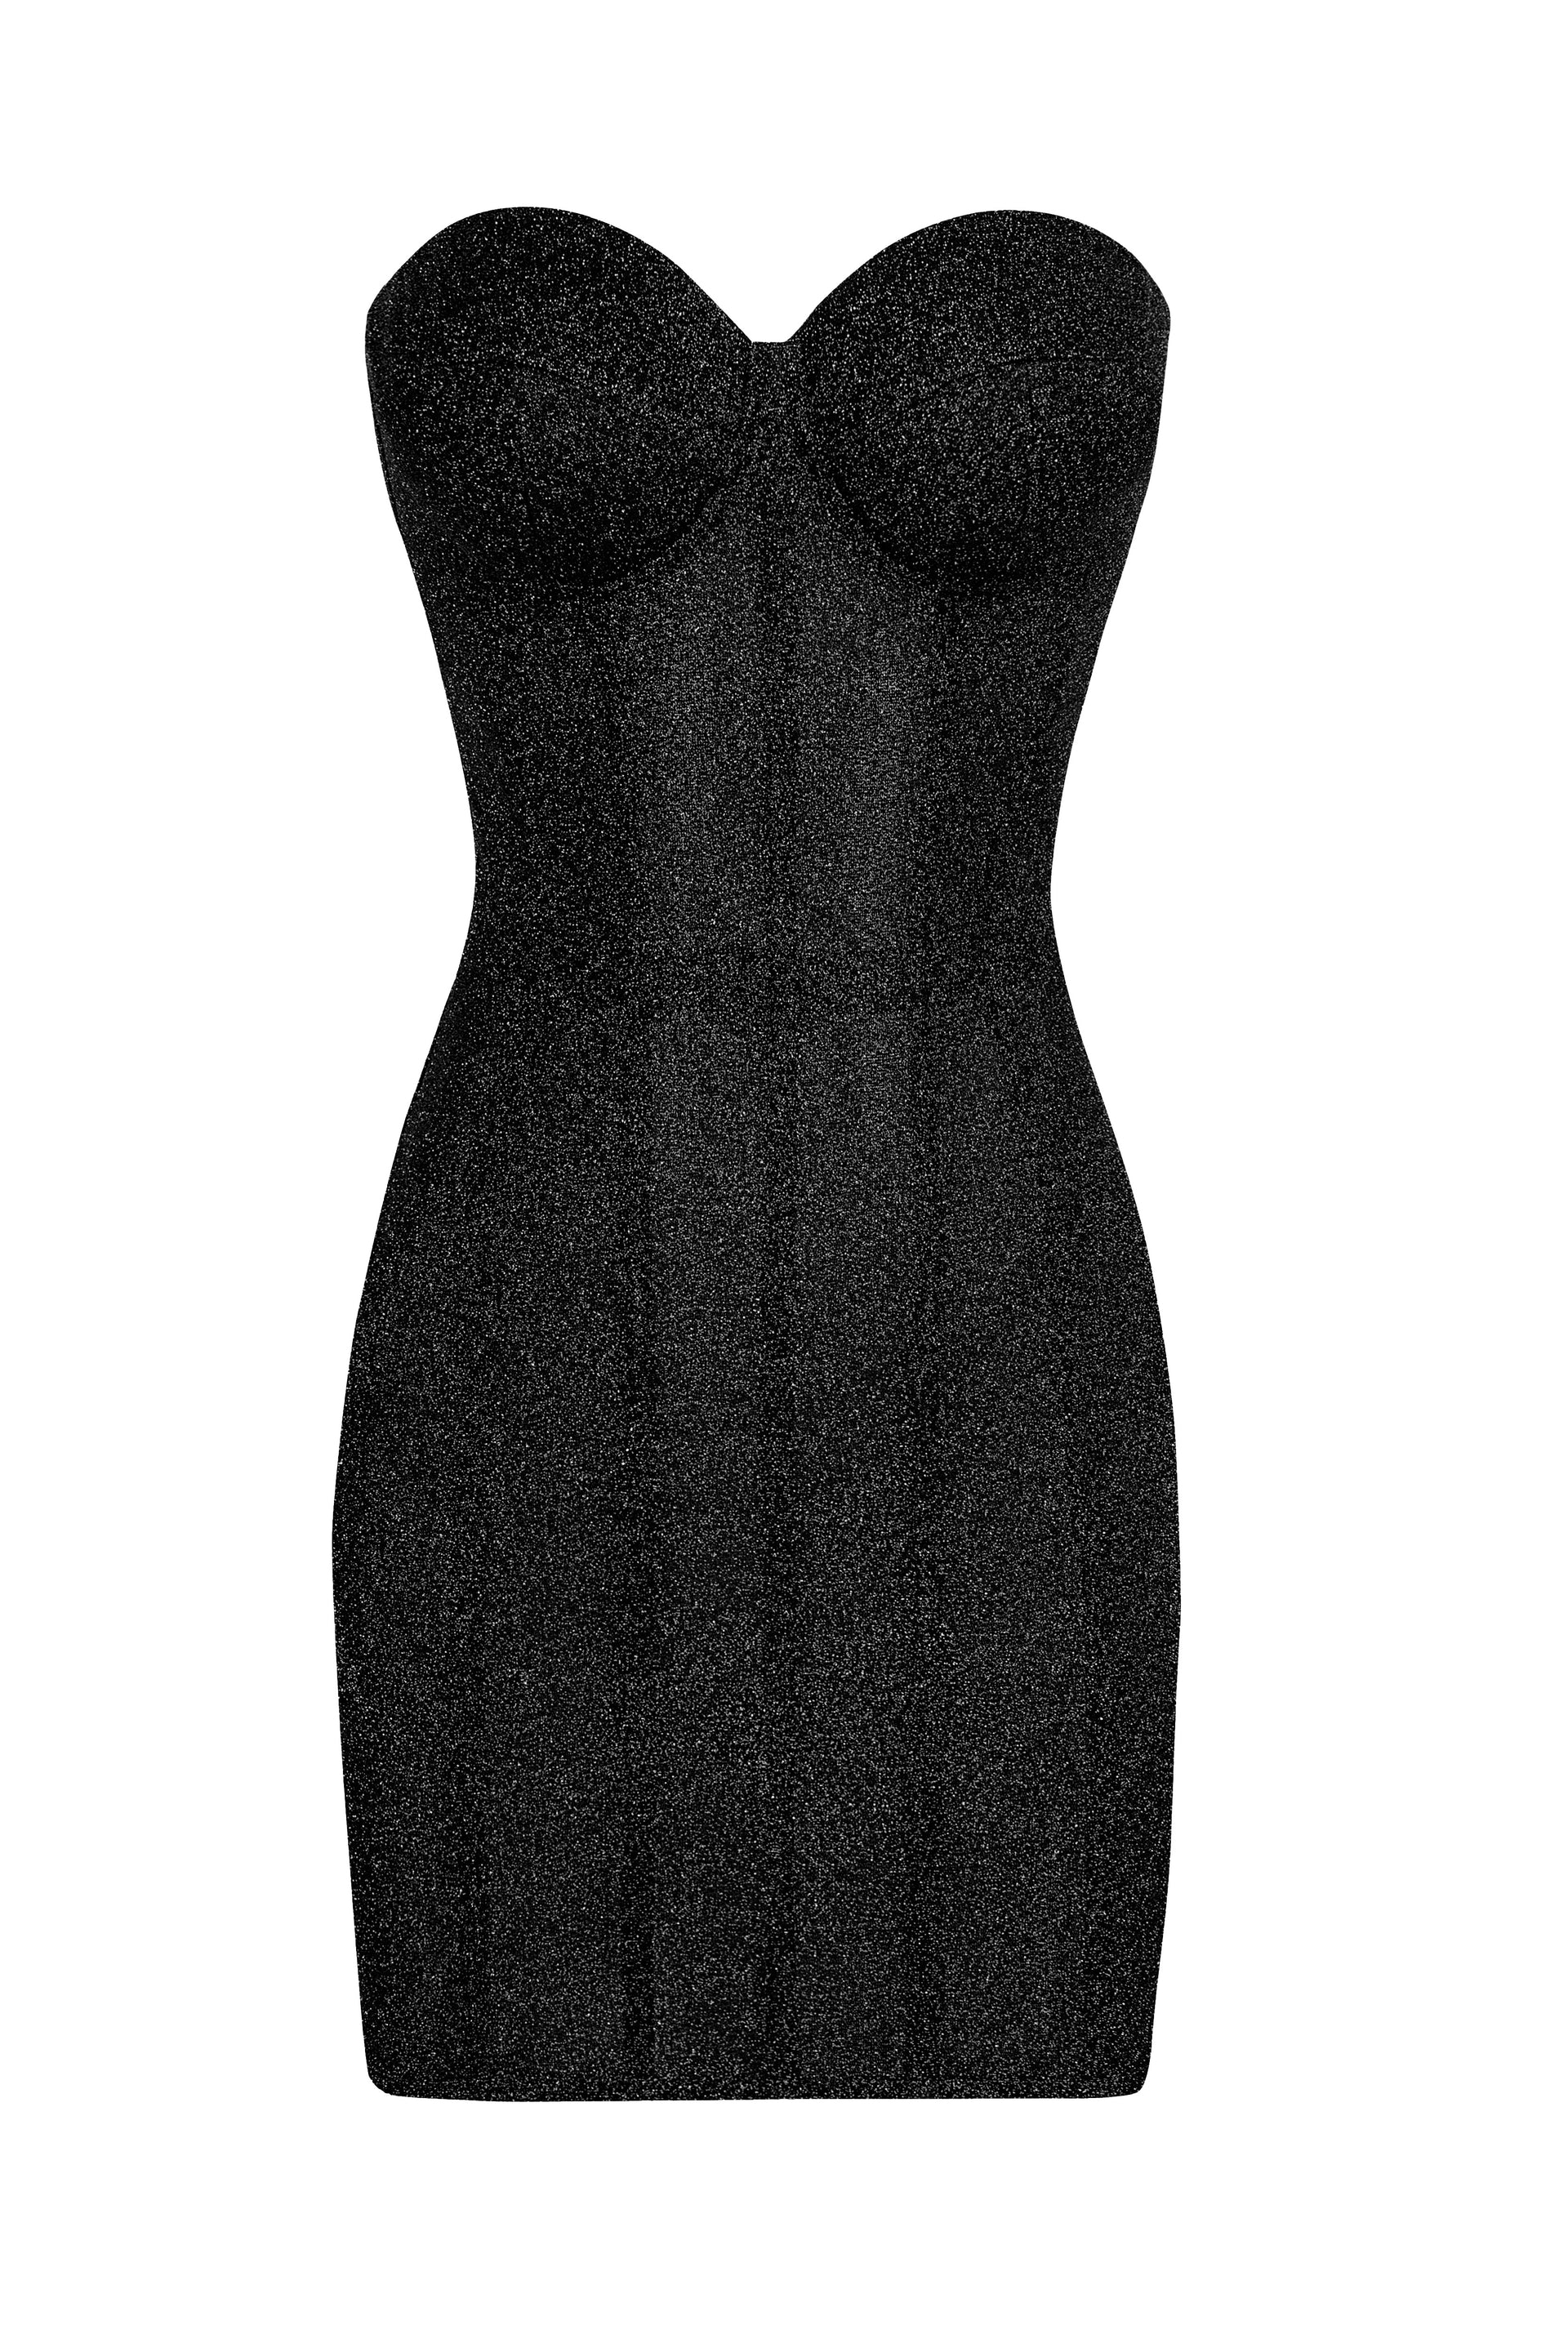 Блискуча чорна сукня